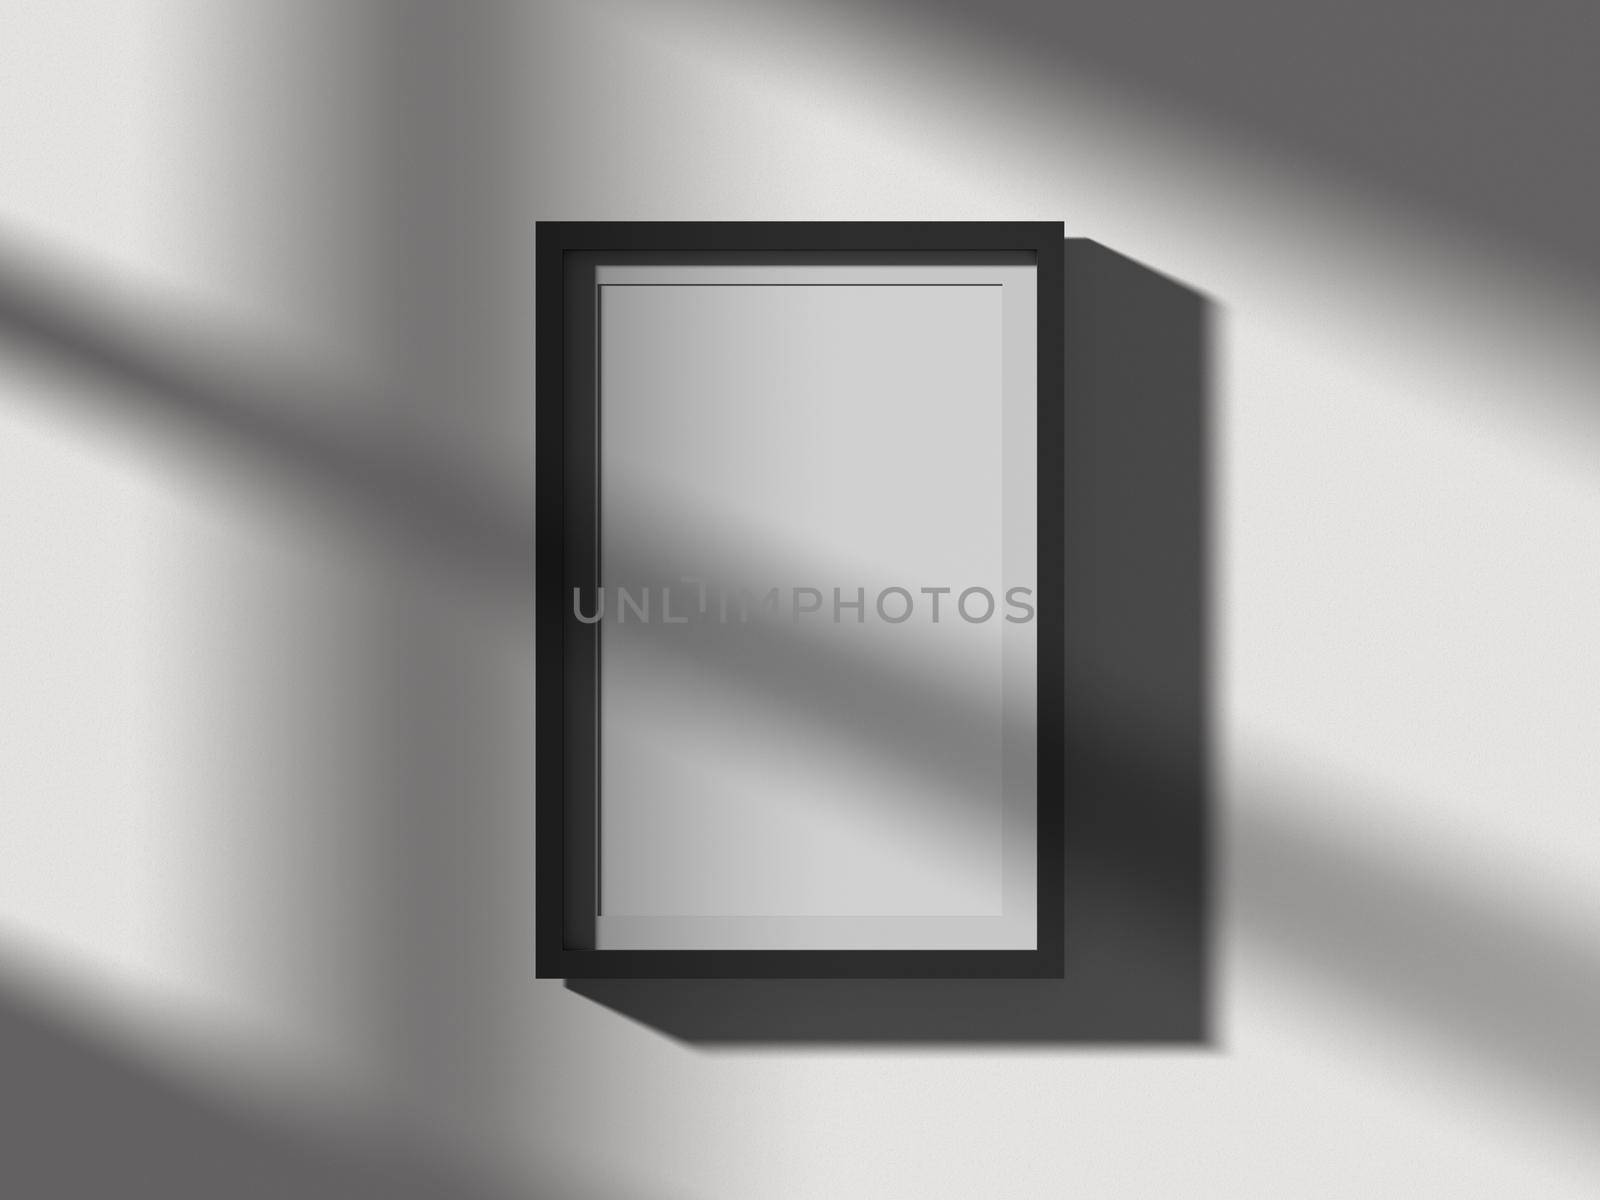 Realistic of photo frame mockup with window shadow, 3d illustration by nutzchotwarut